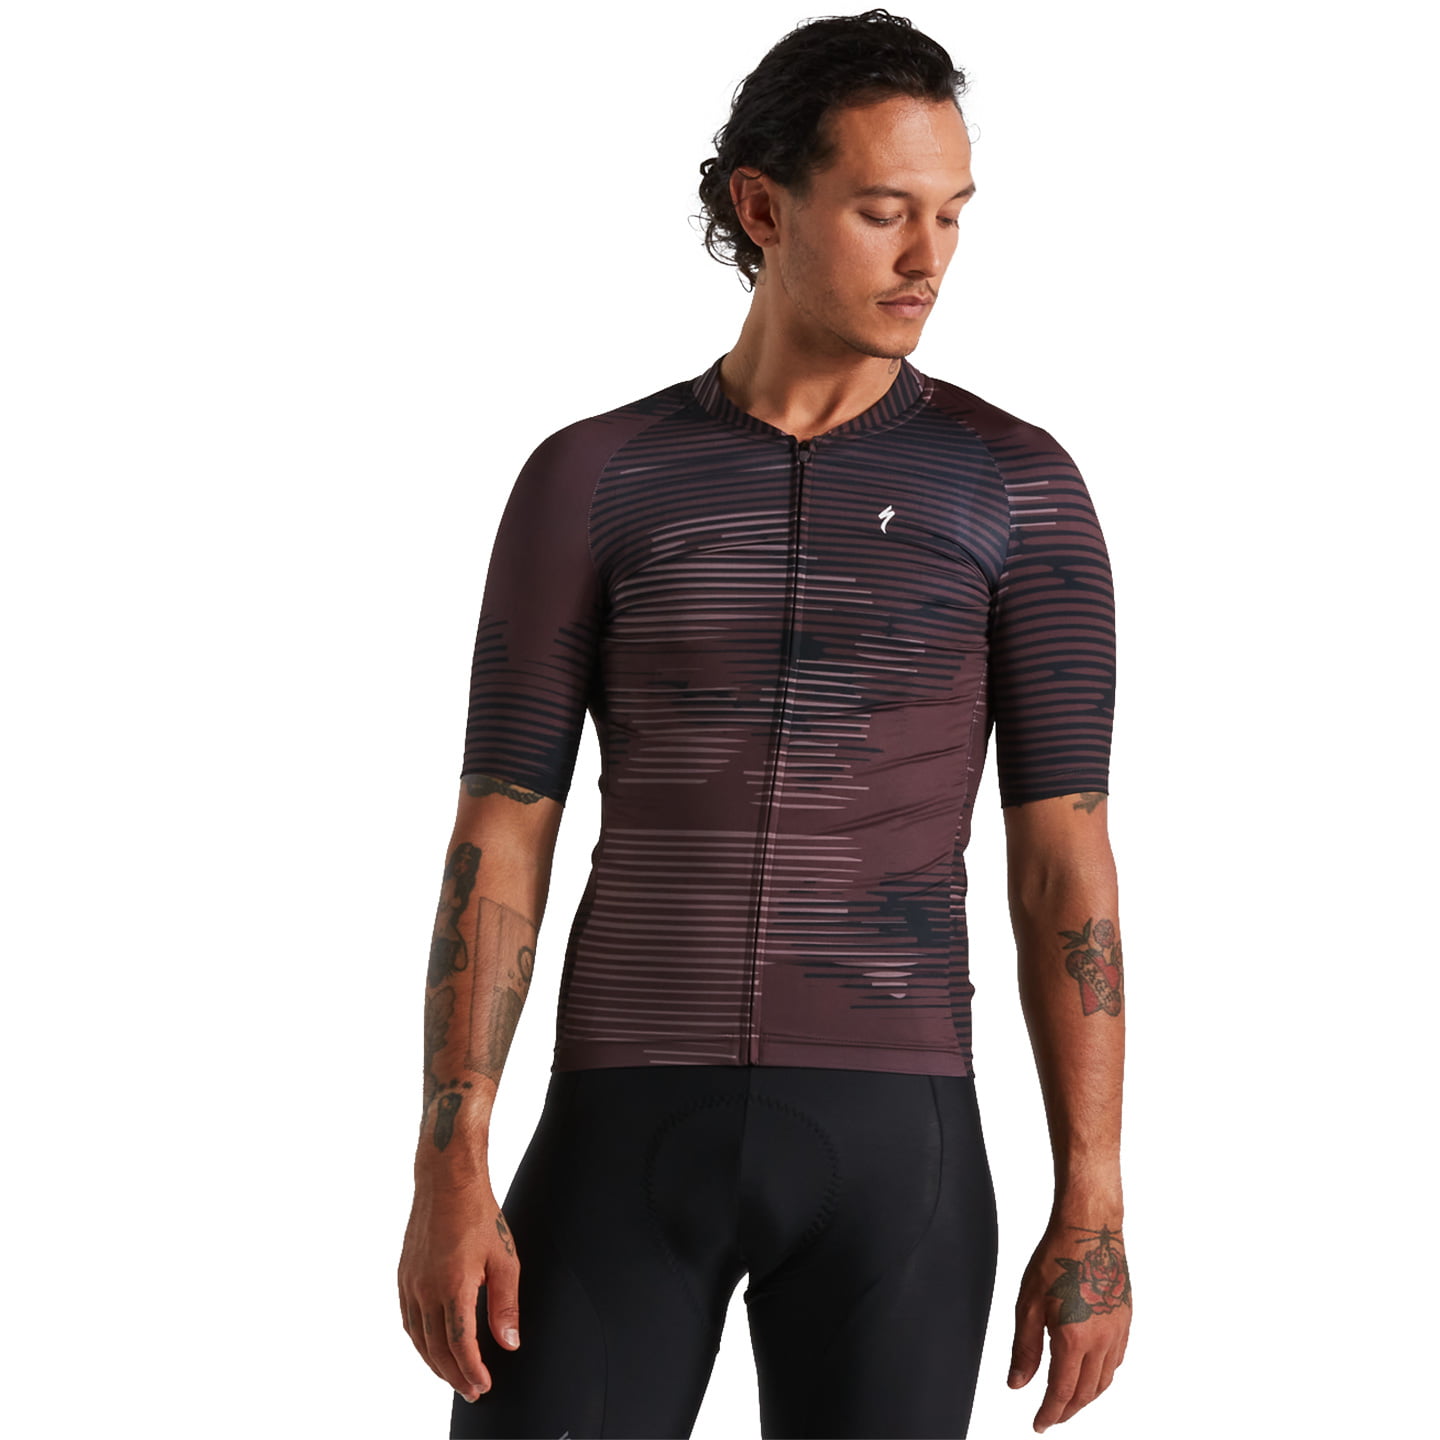 SPECIALIZED SL Blur Short Sleeve Jersey Short Sleeve Jersey, for men, size XL, Cycling jersey, Cycle clothing